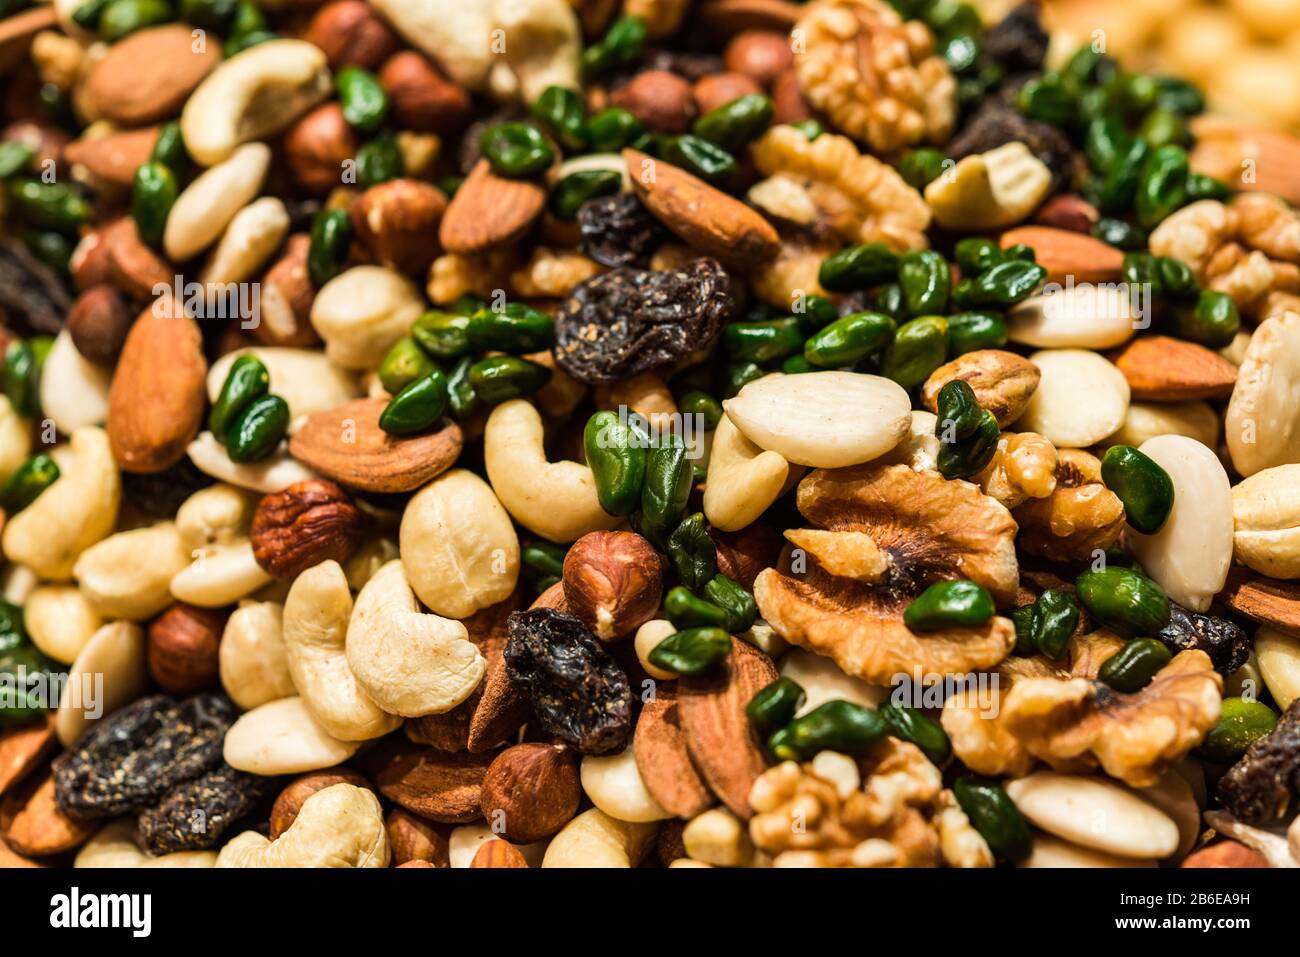 Dried fruit and nuts mix with raisins, almonds, walnuts, cashew nuts, hazelnuts. Stock Photo